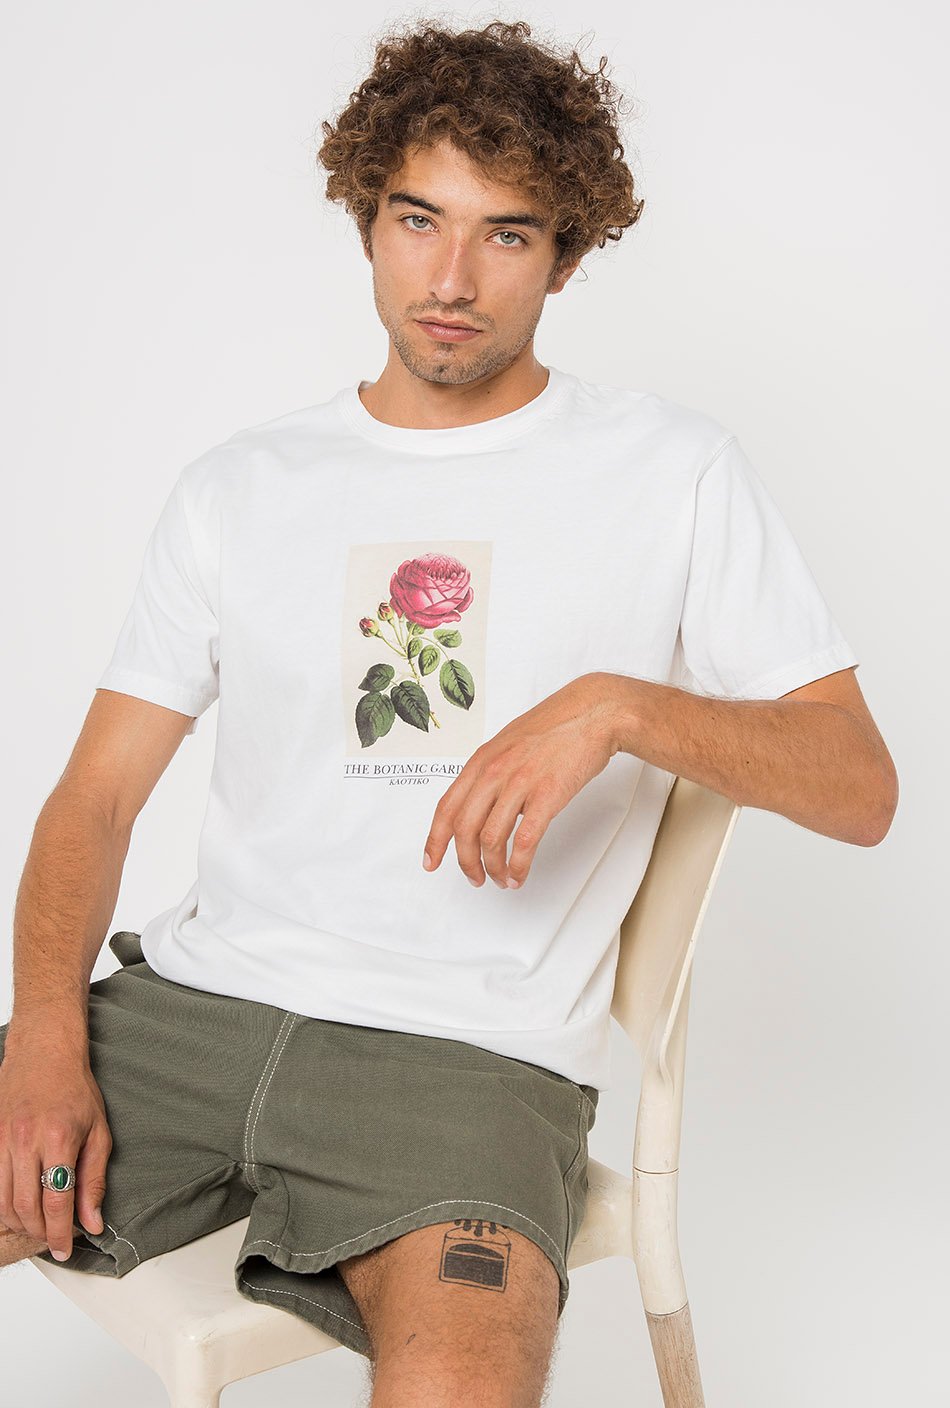 T-shirt Rose Blanc